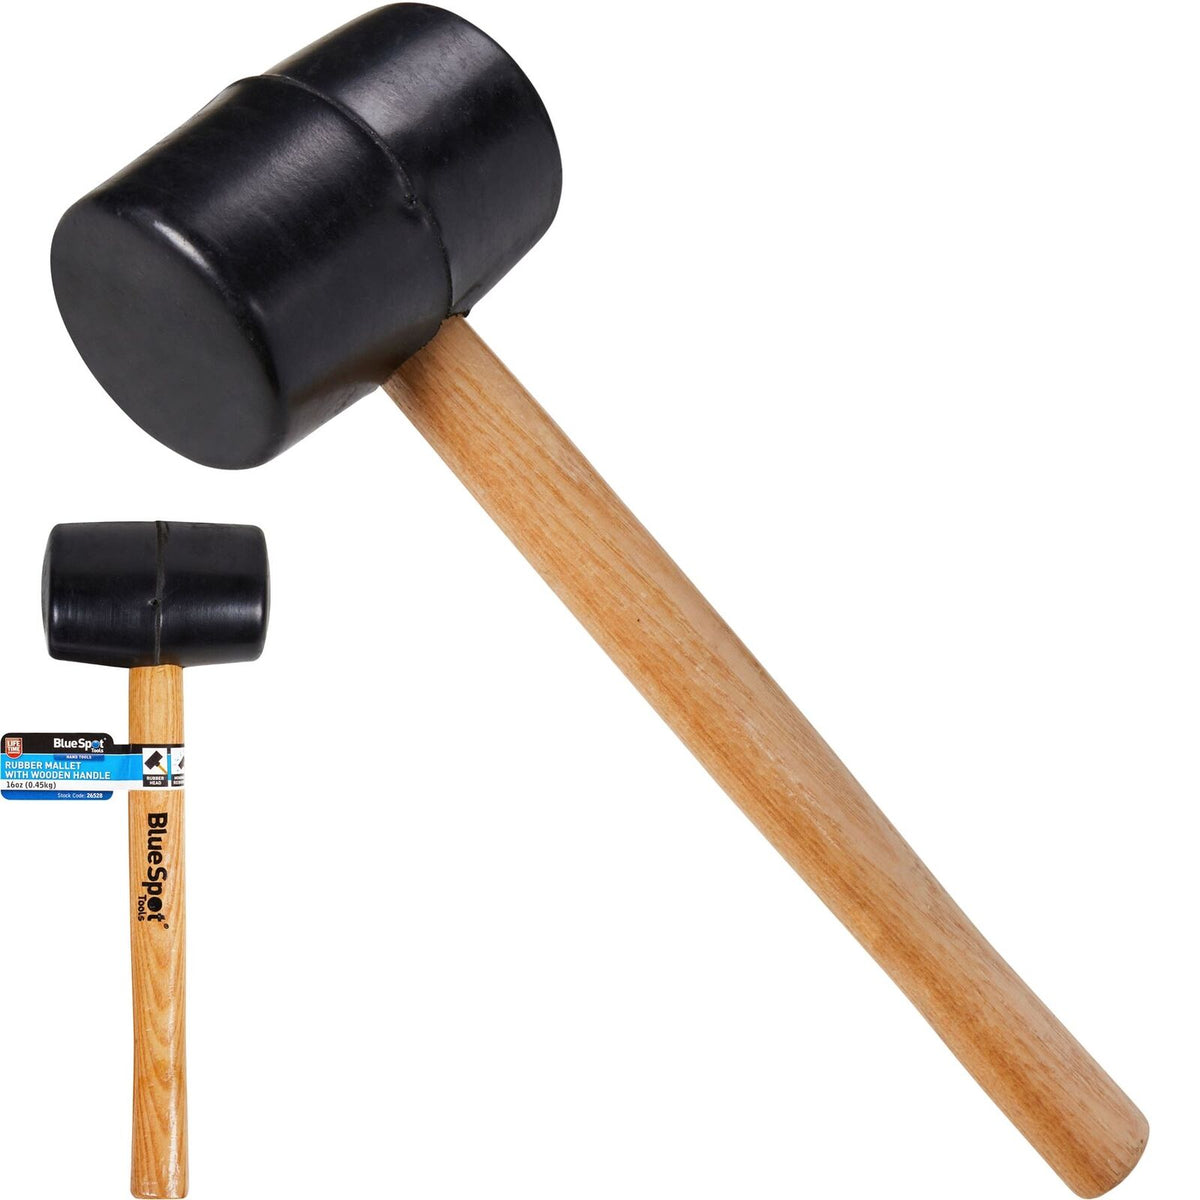 BlueSpot 16oz Black Rubber Hammer Mallet Hardwood Shaft Grip Handle DIY